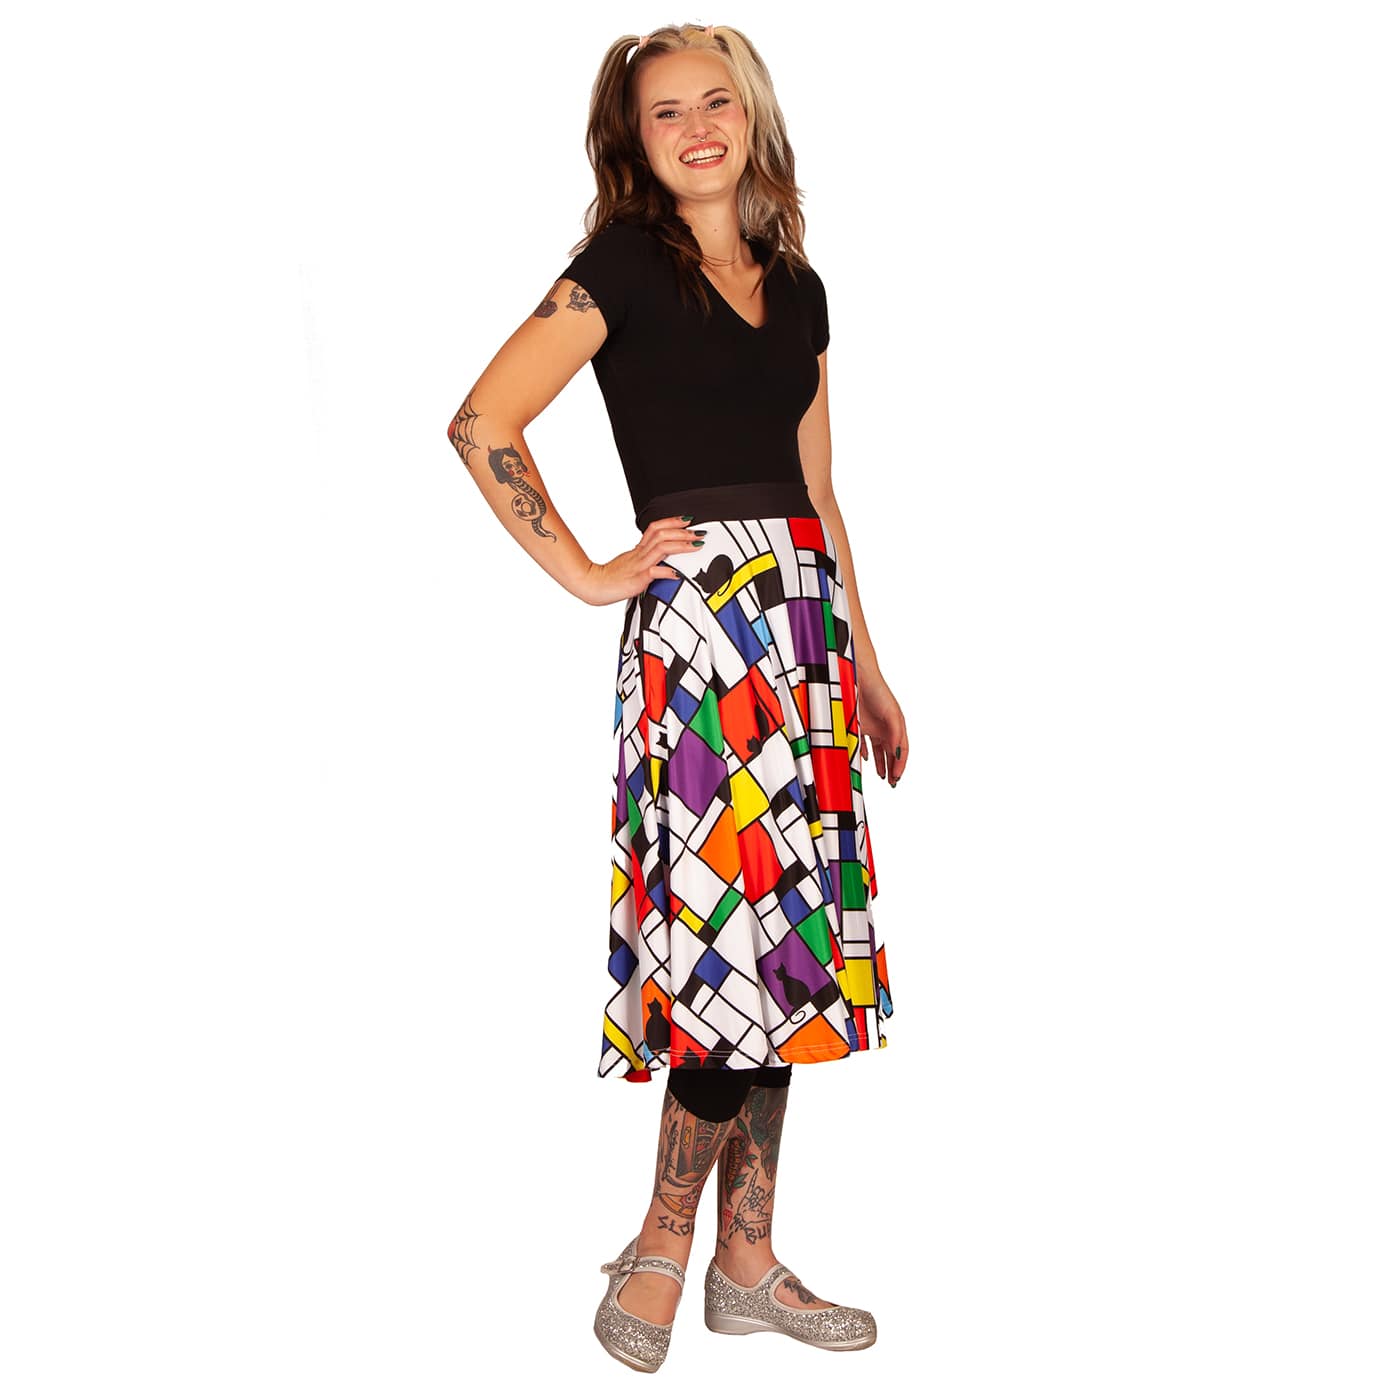 Intrigue Swishy Skirt by RainbowsAndFairies.com.au (Black Cats - Mondrian Art - Skirt With Pockets - Circle Skirt - Vintage Inspired - Mod Retro) - SKU: CL_SWISH_INTRG_ORG - Pic-08